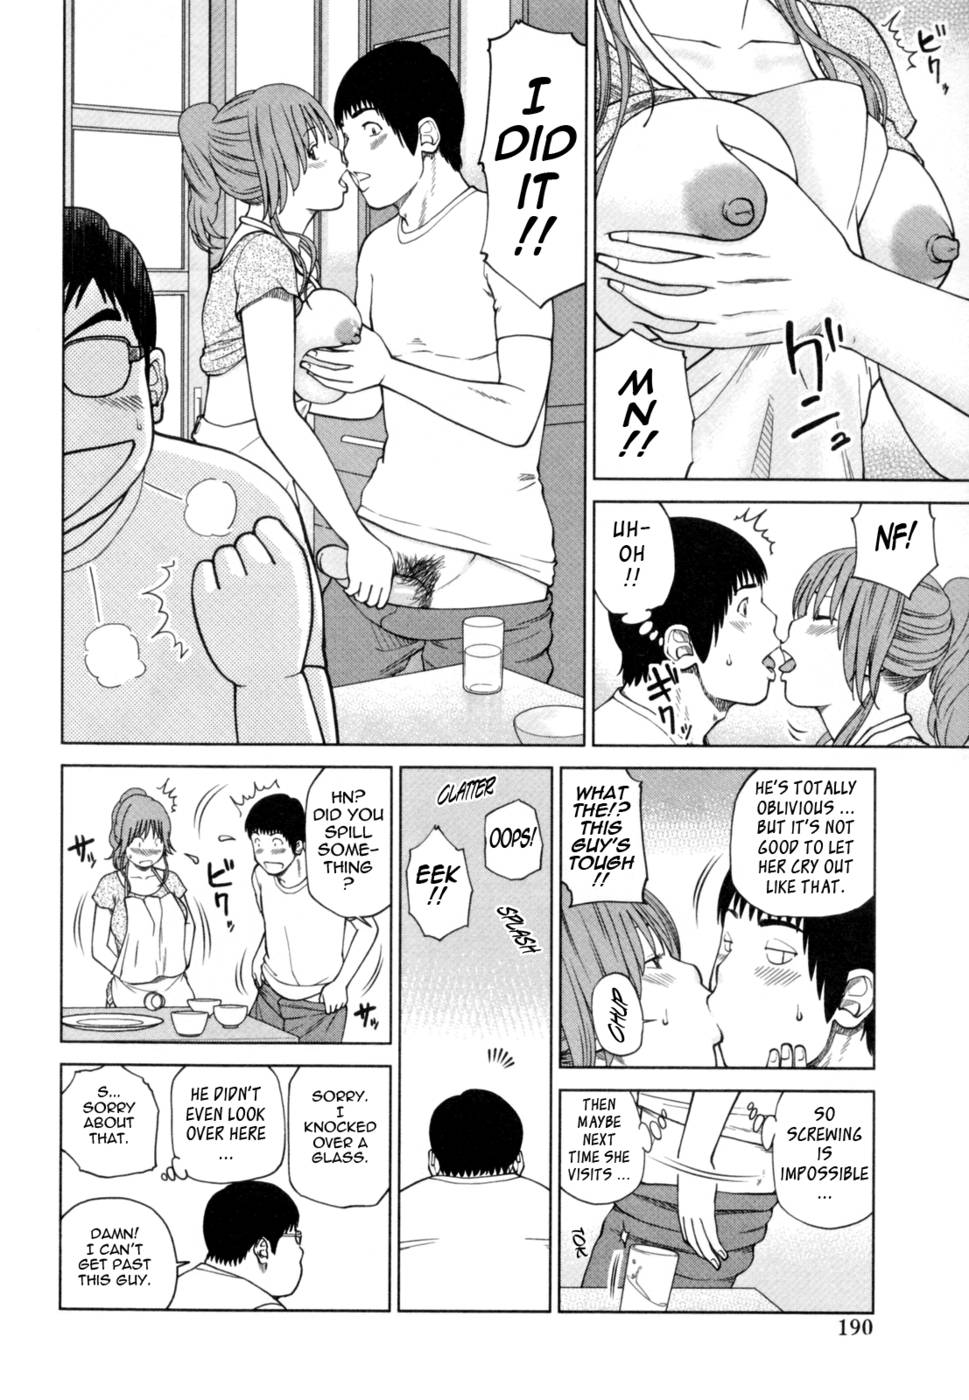 32 Year Old Unsatisfied Wife-Chapter 10-The Wife Next Door-Hentai Manga Hentai Comic image